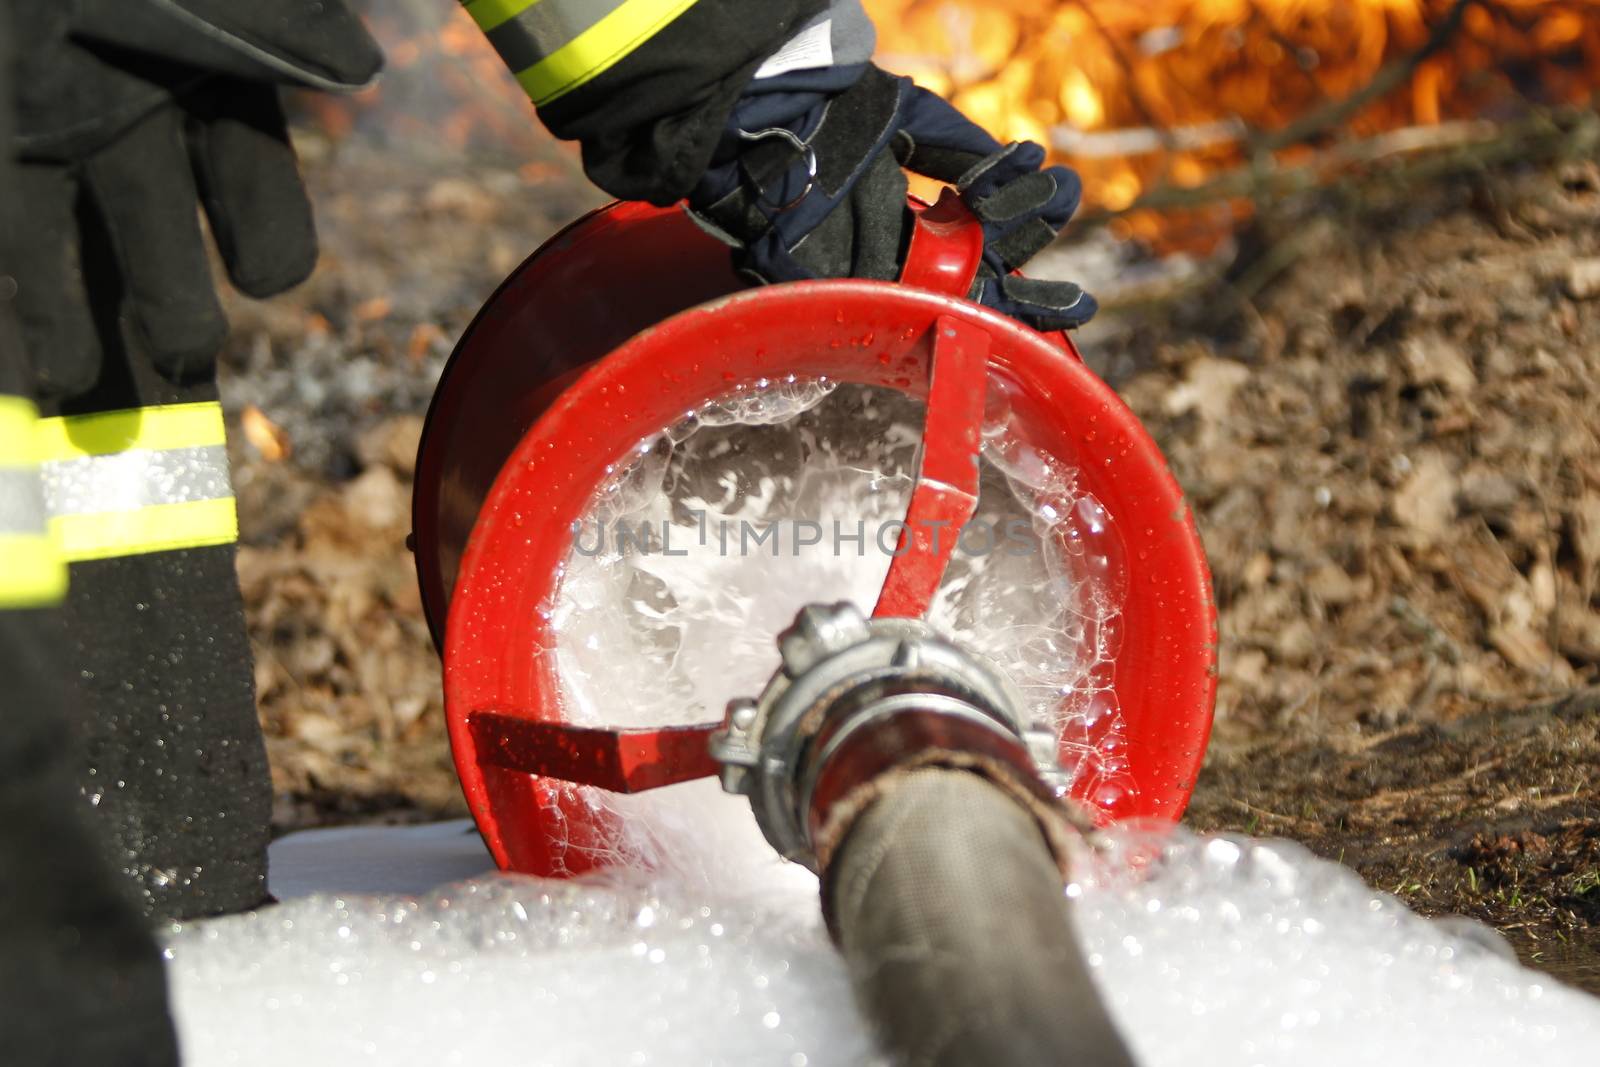 The fireman's hand holds a fire hose to extinguish a fire.Extinguish the fire. Fire hose